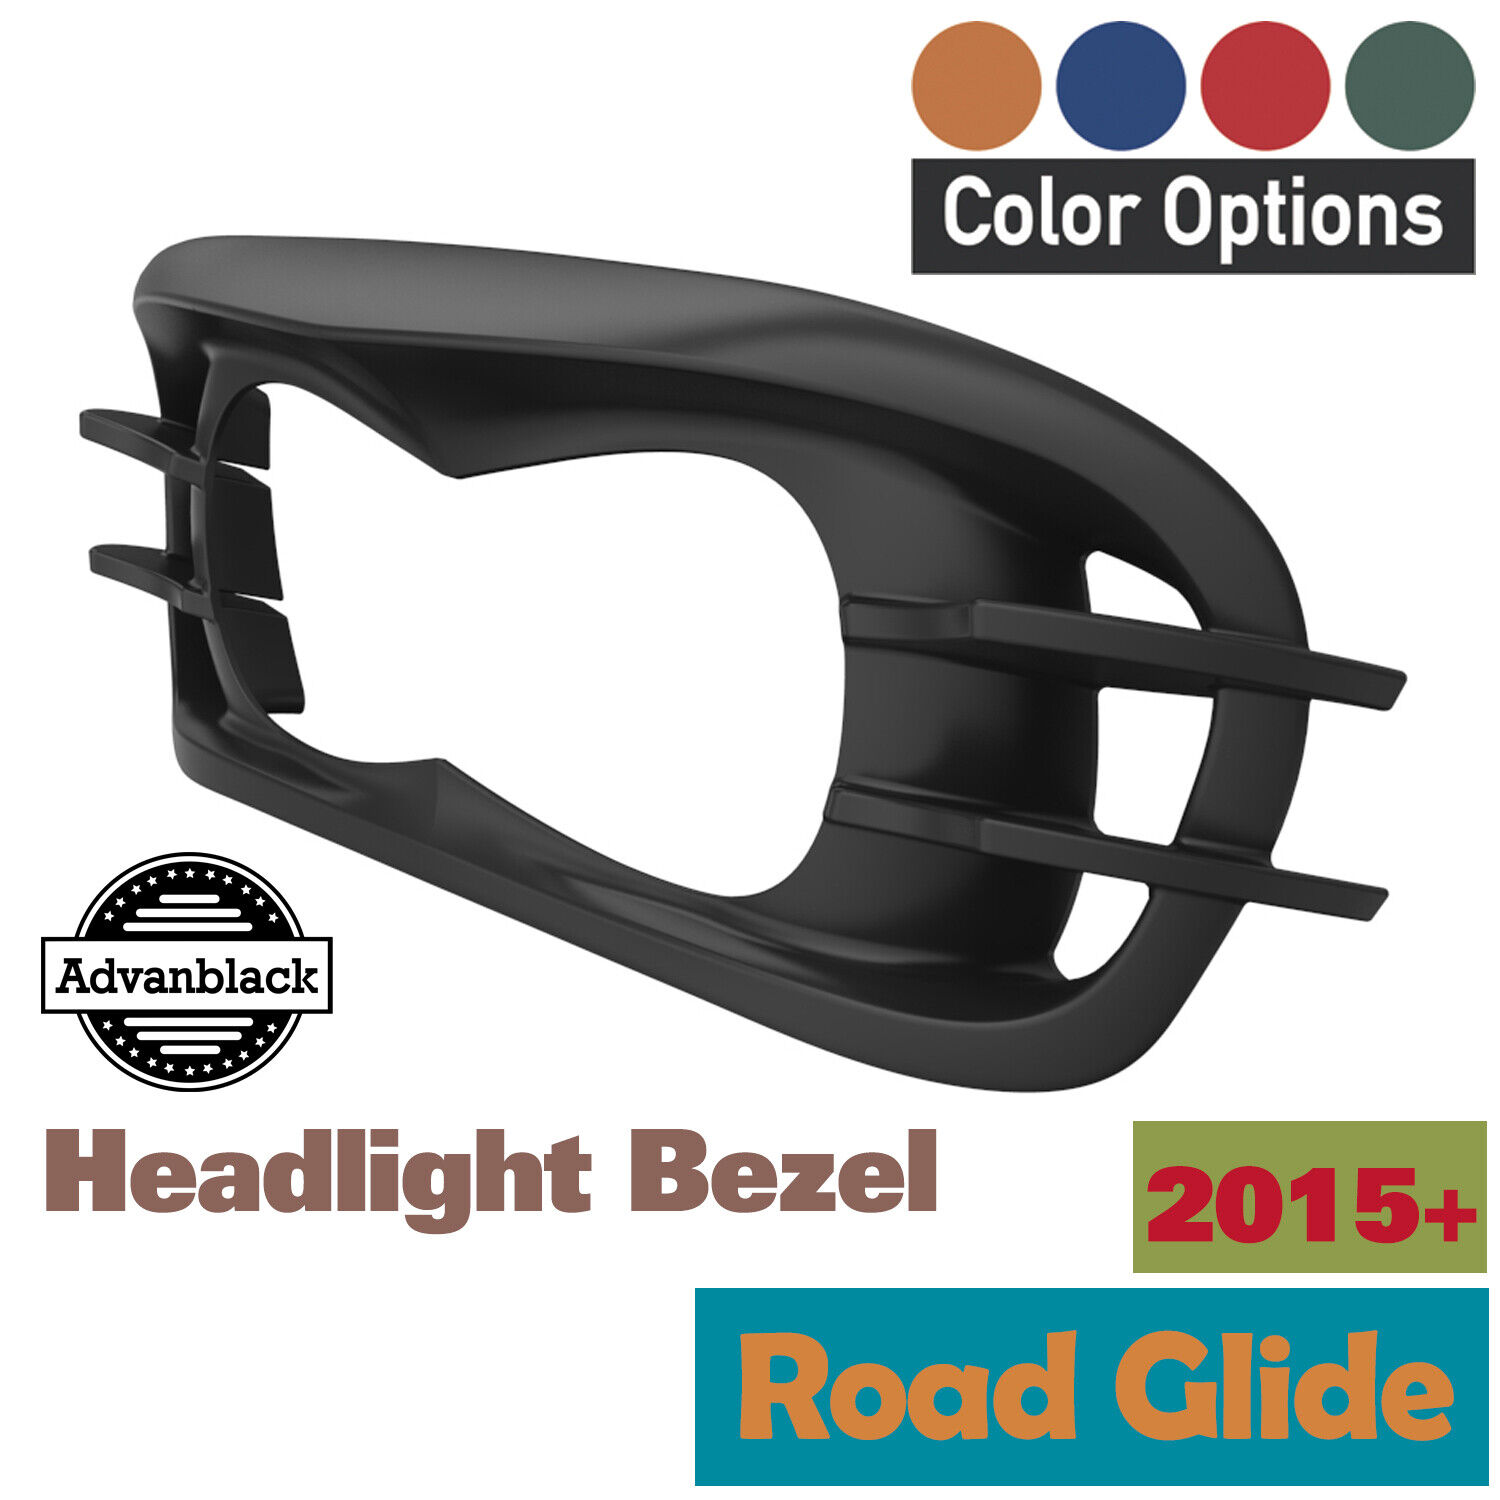 Advanblack Color Matched Headlight Bezel For 15+ Harley Touring Road Glide FLTRX